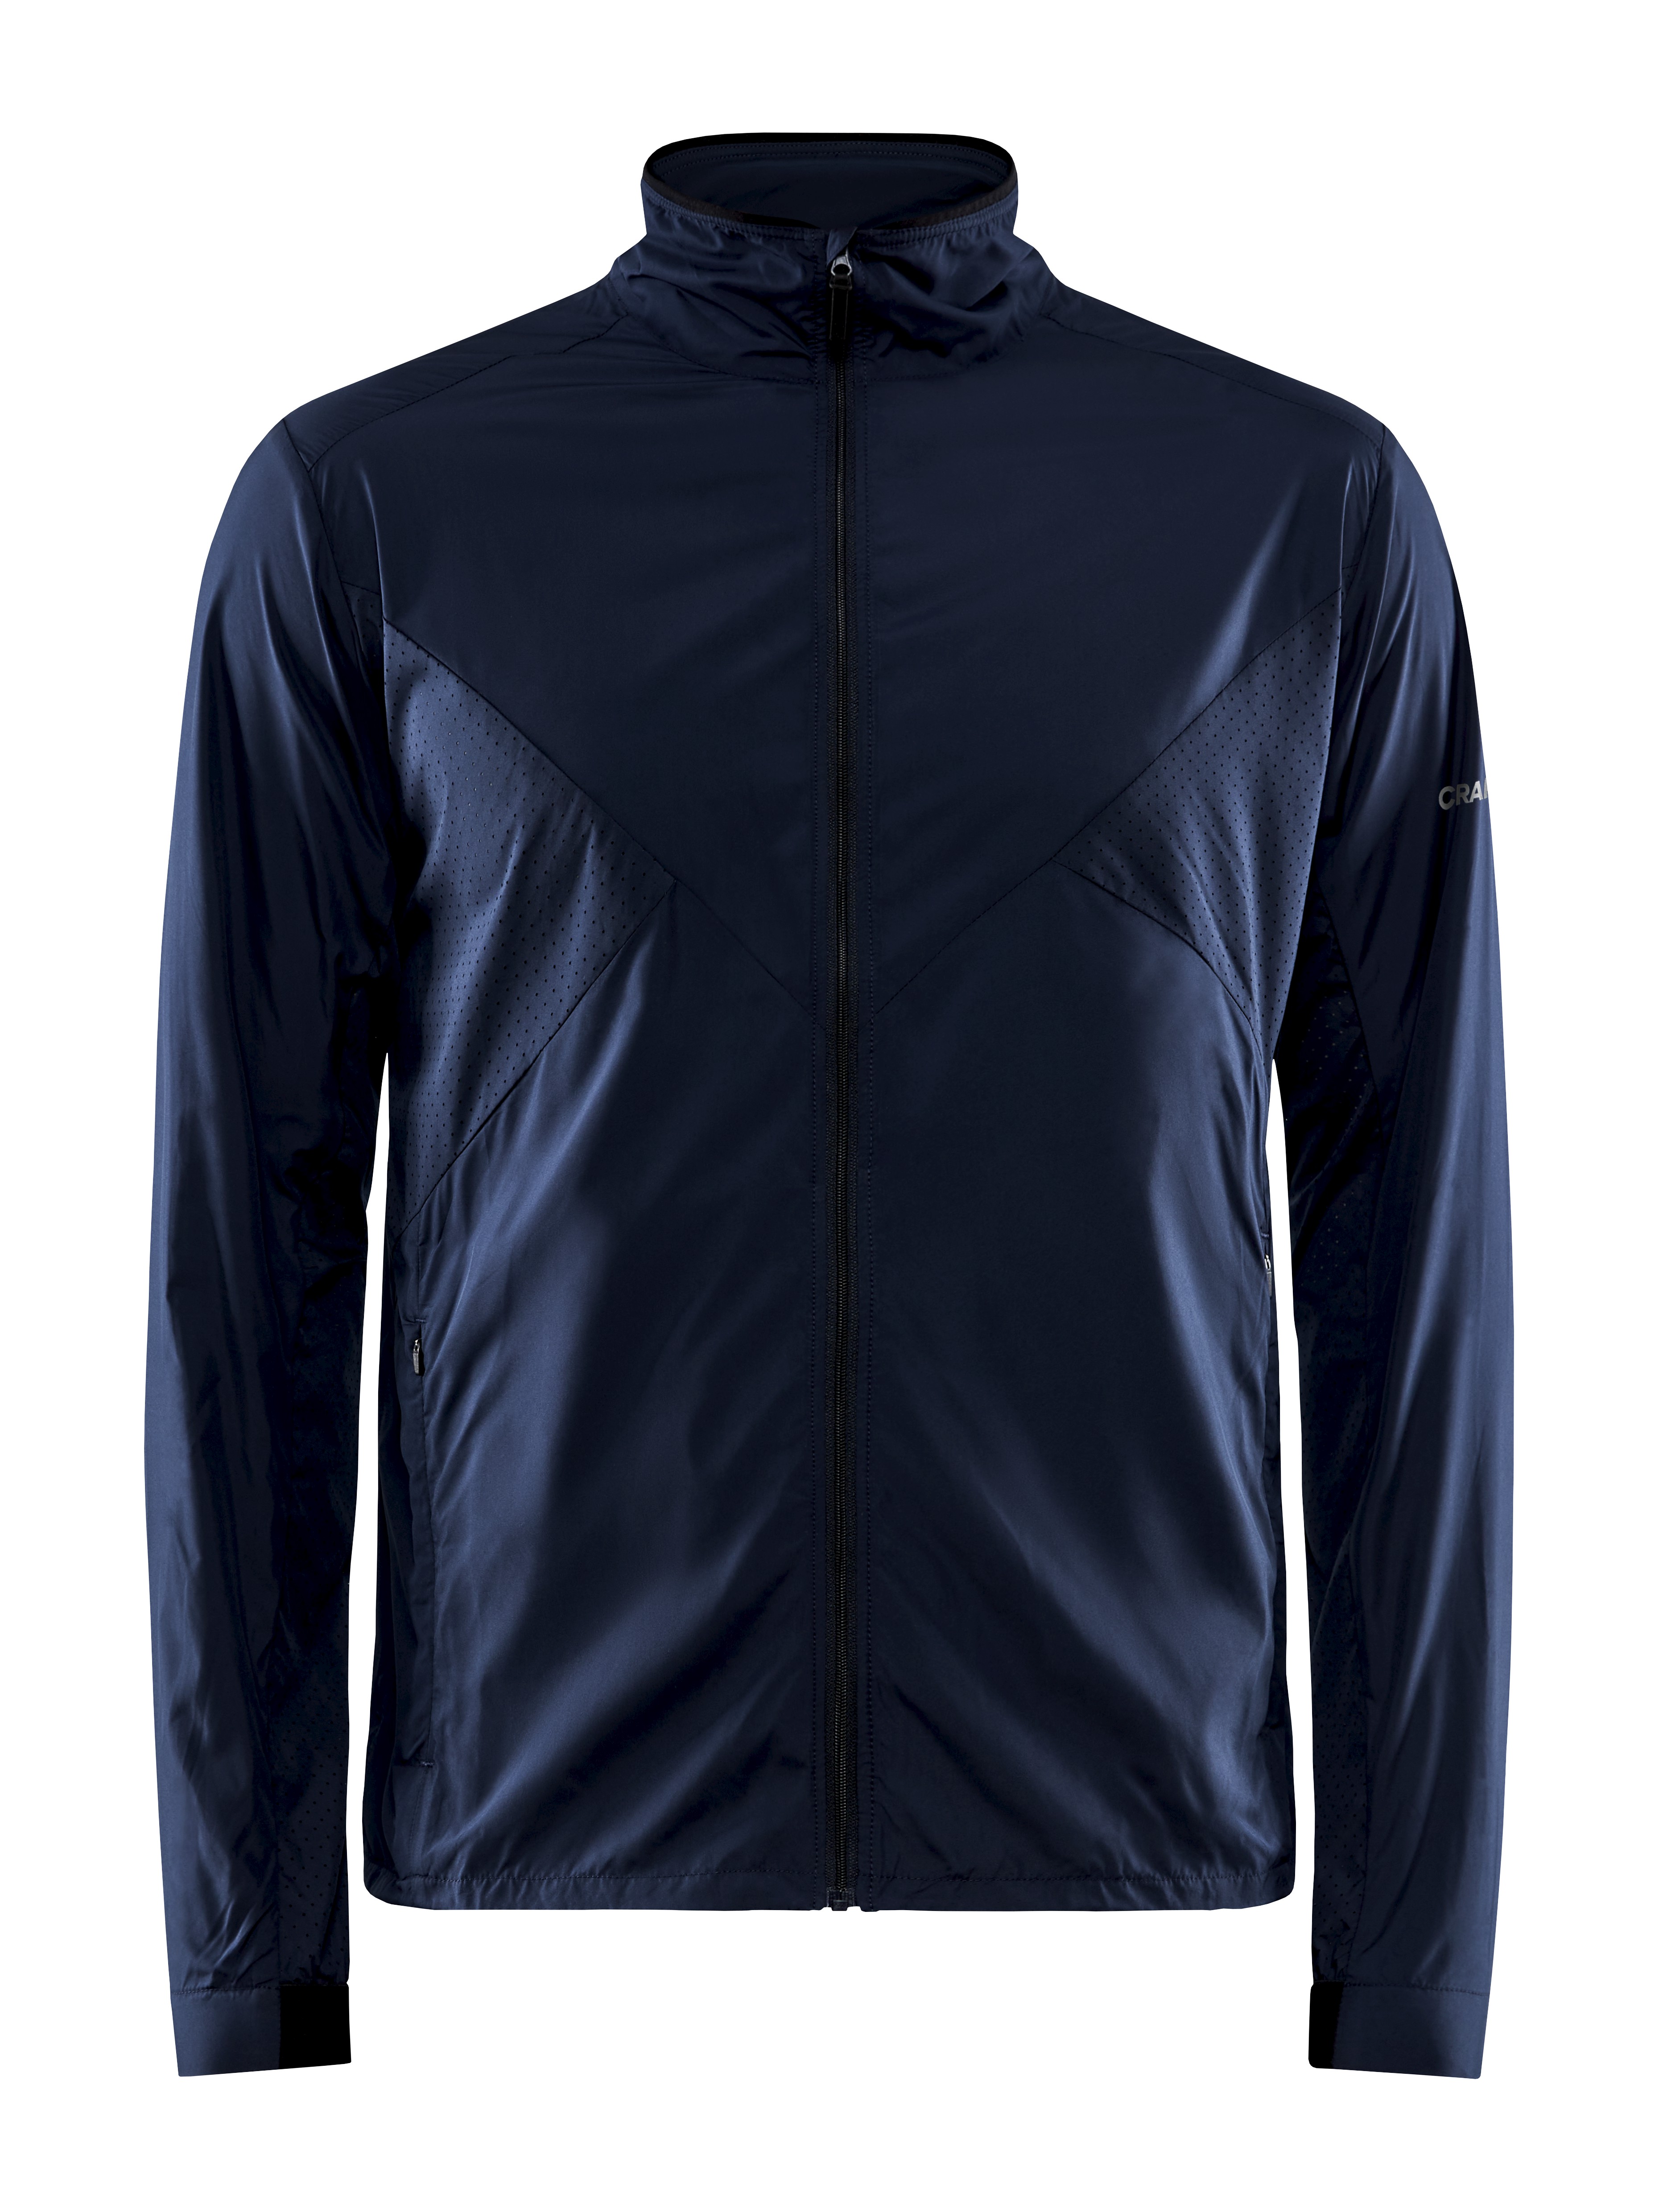 ADV Essence Wind Jacket M - Navy blue | Craft Sportswear